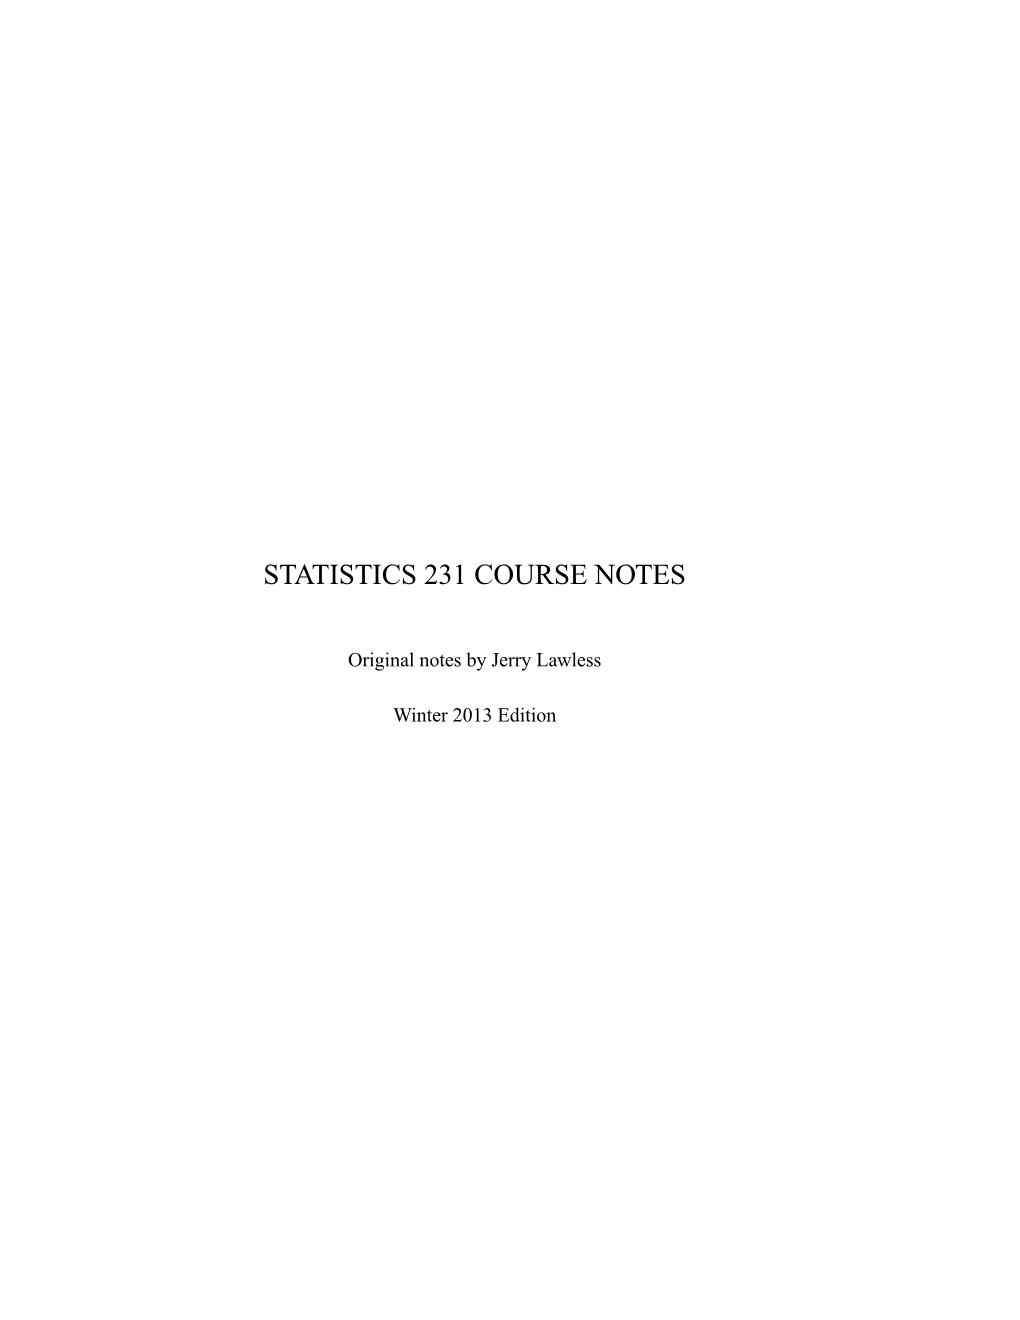 Statistics 231 Course Notes